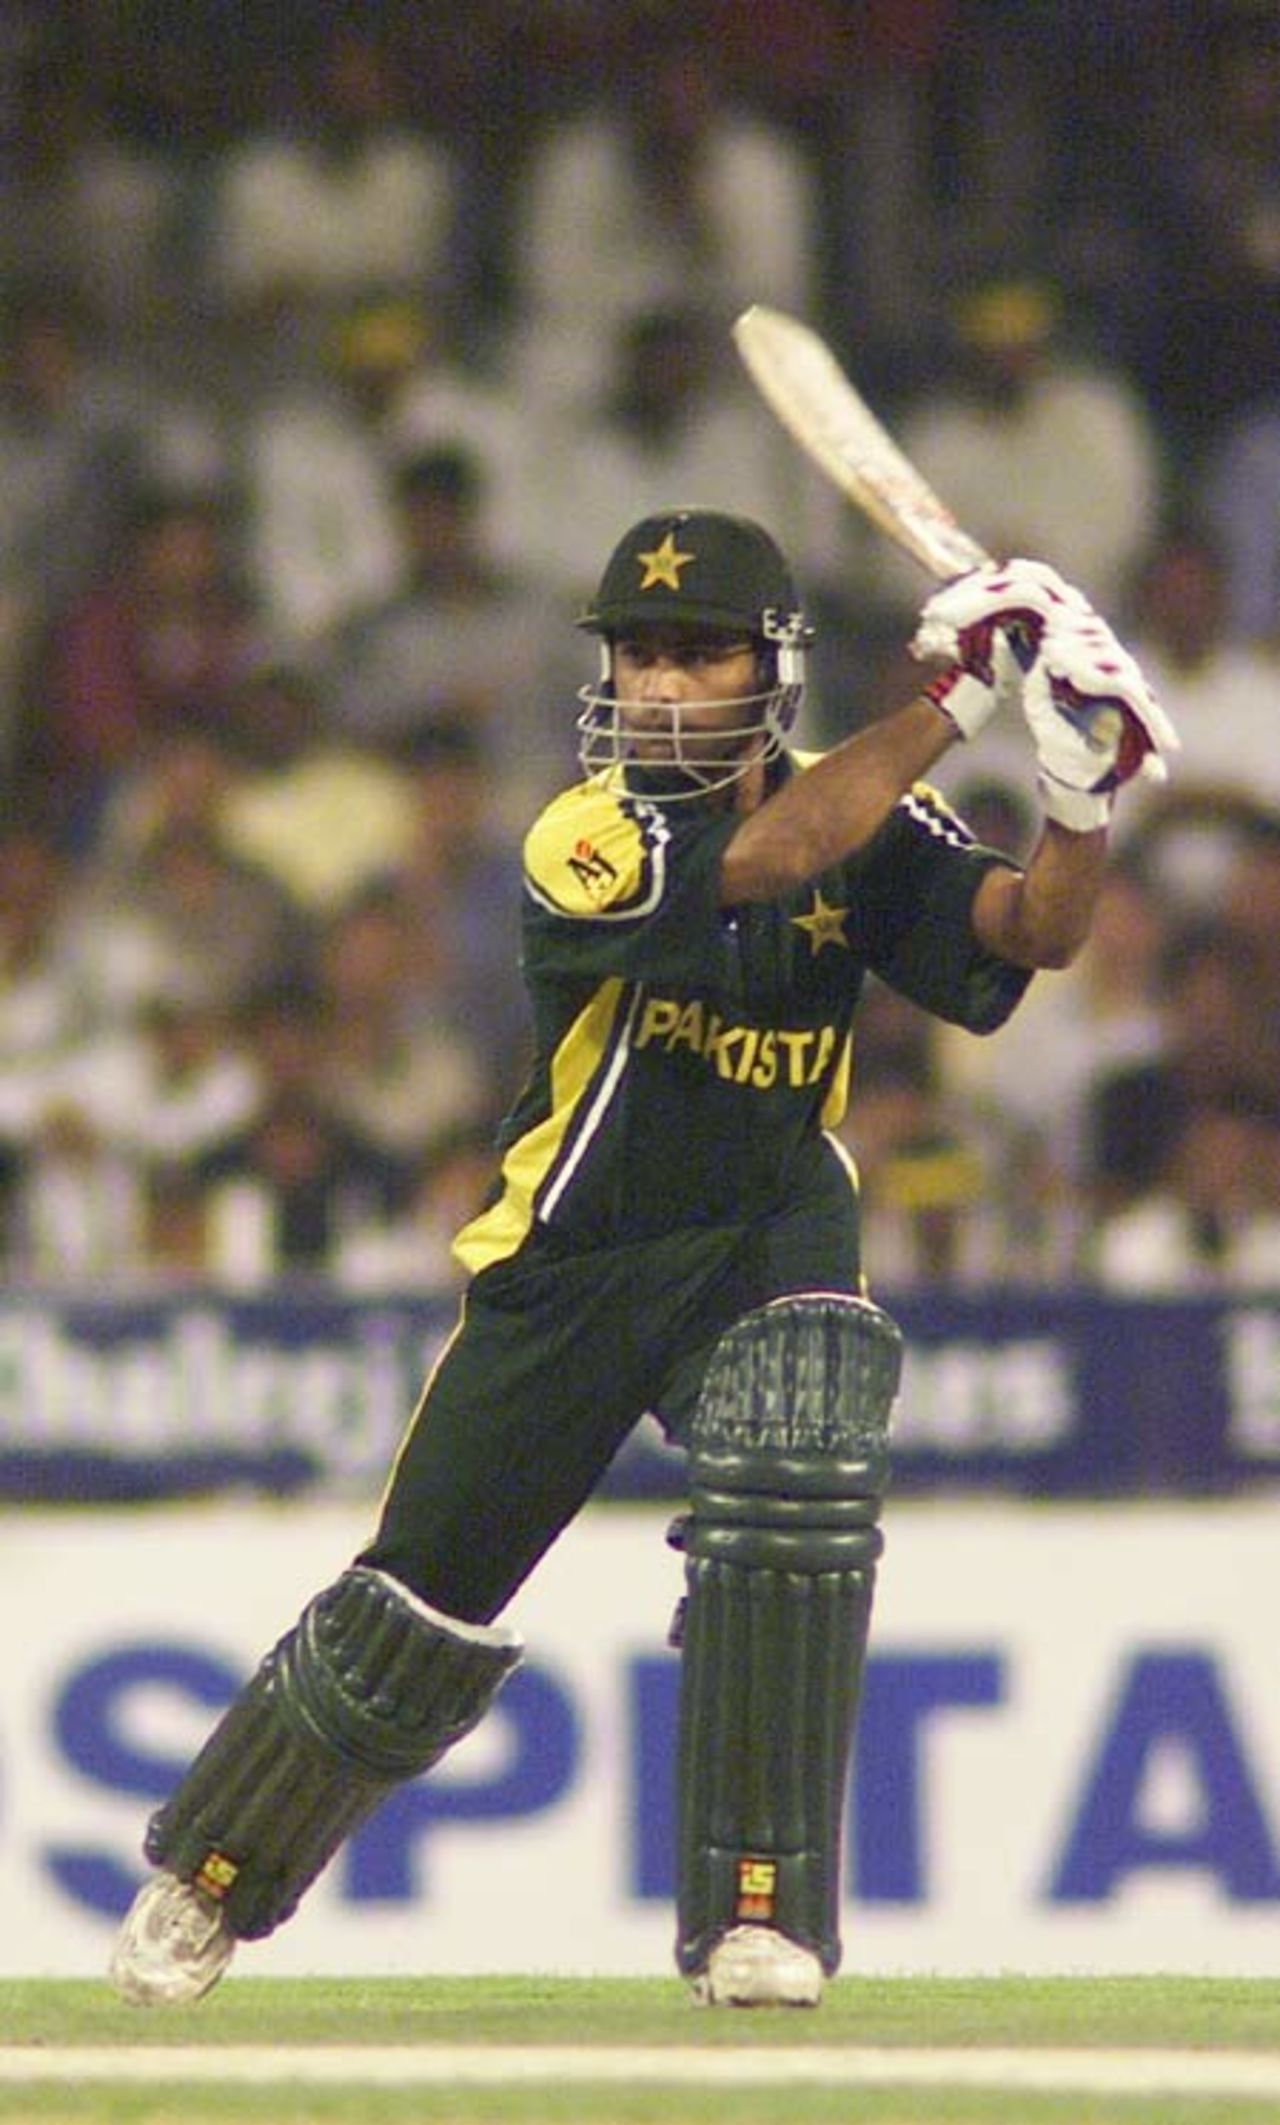 Mohammad Hafeez drives during his 50 run innings, 2nd Match: Pakistan v Sri Lanka, Cherry Blossom Sharjah Cup, 4 Apr 2003